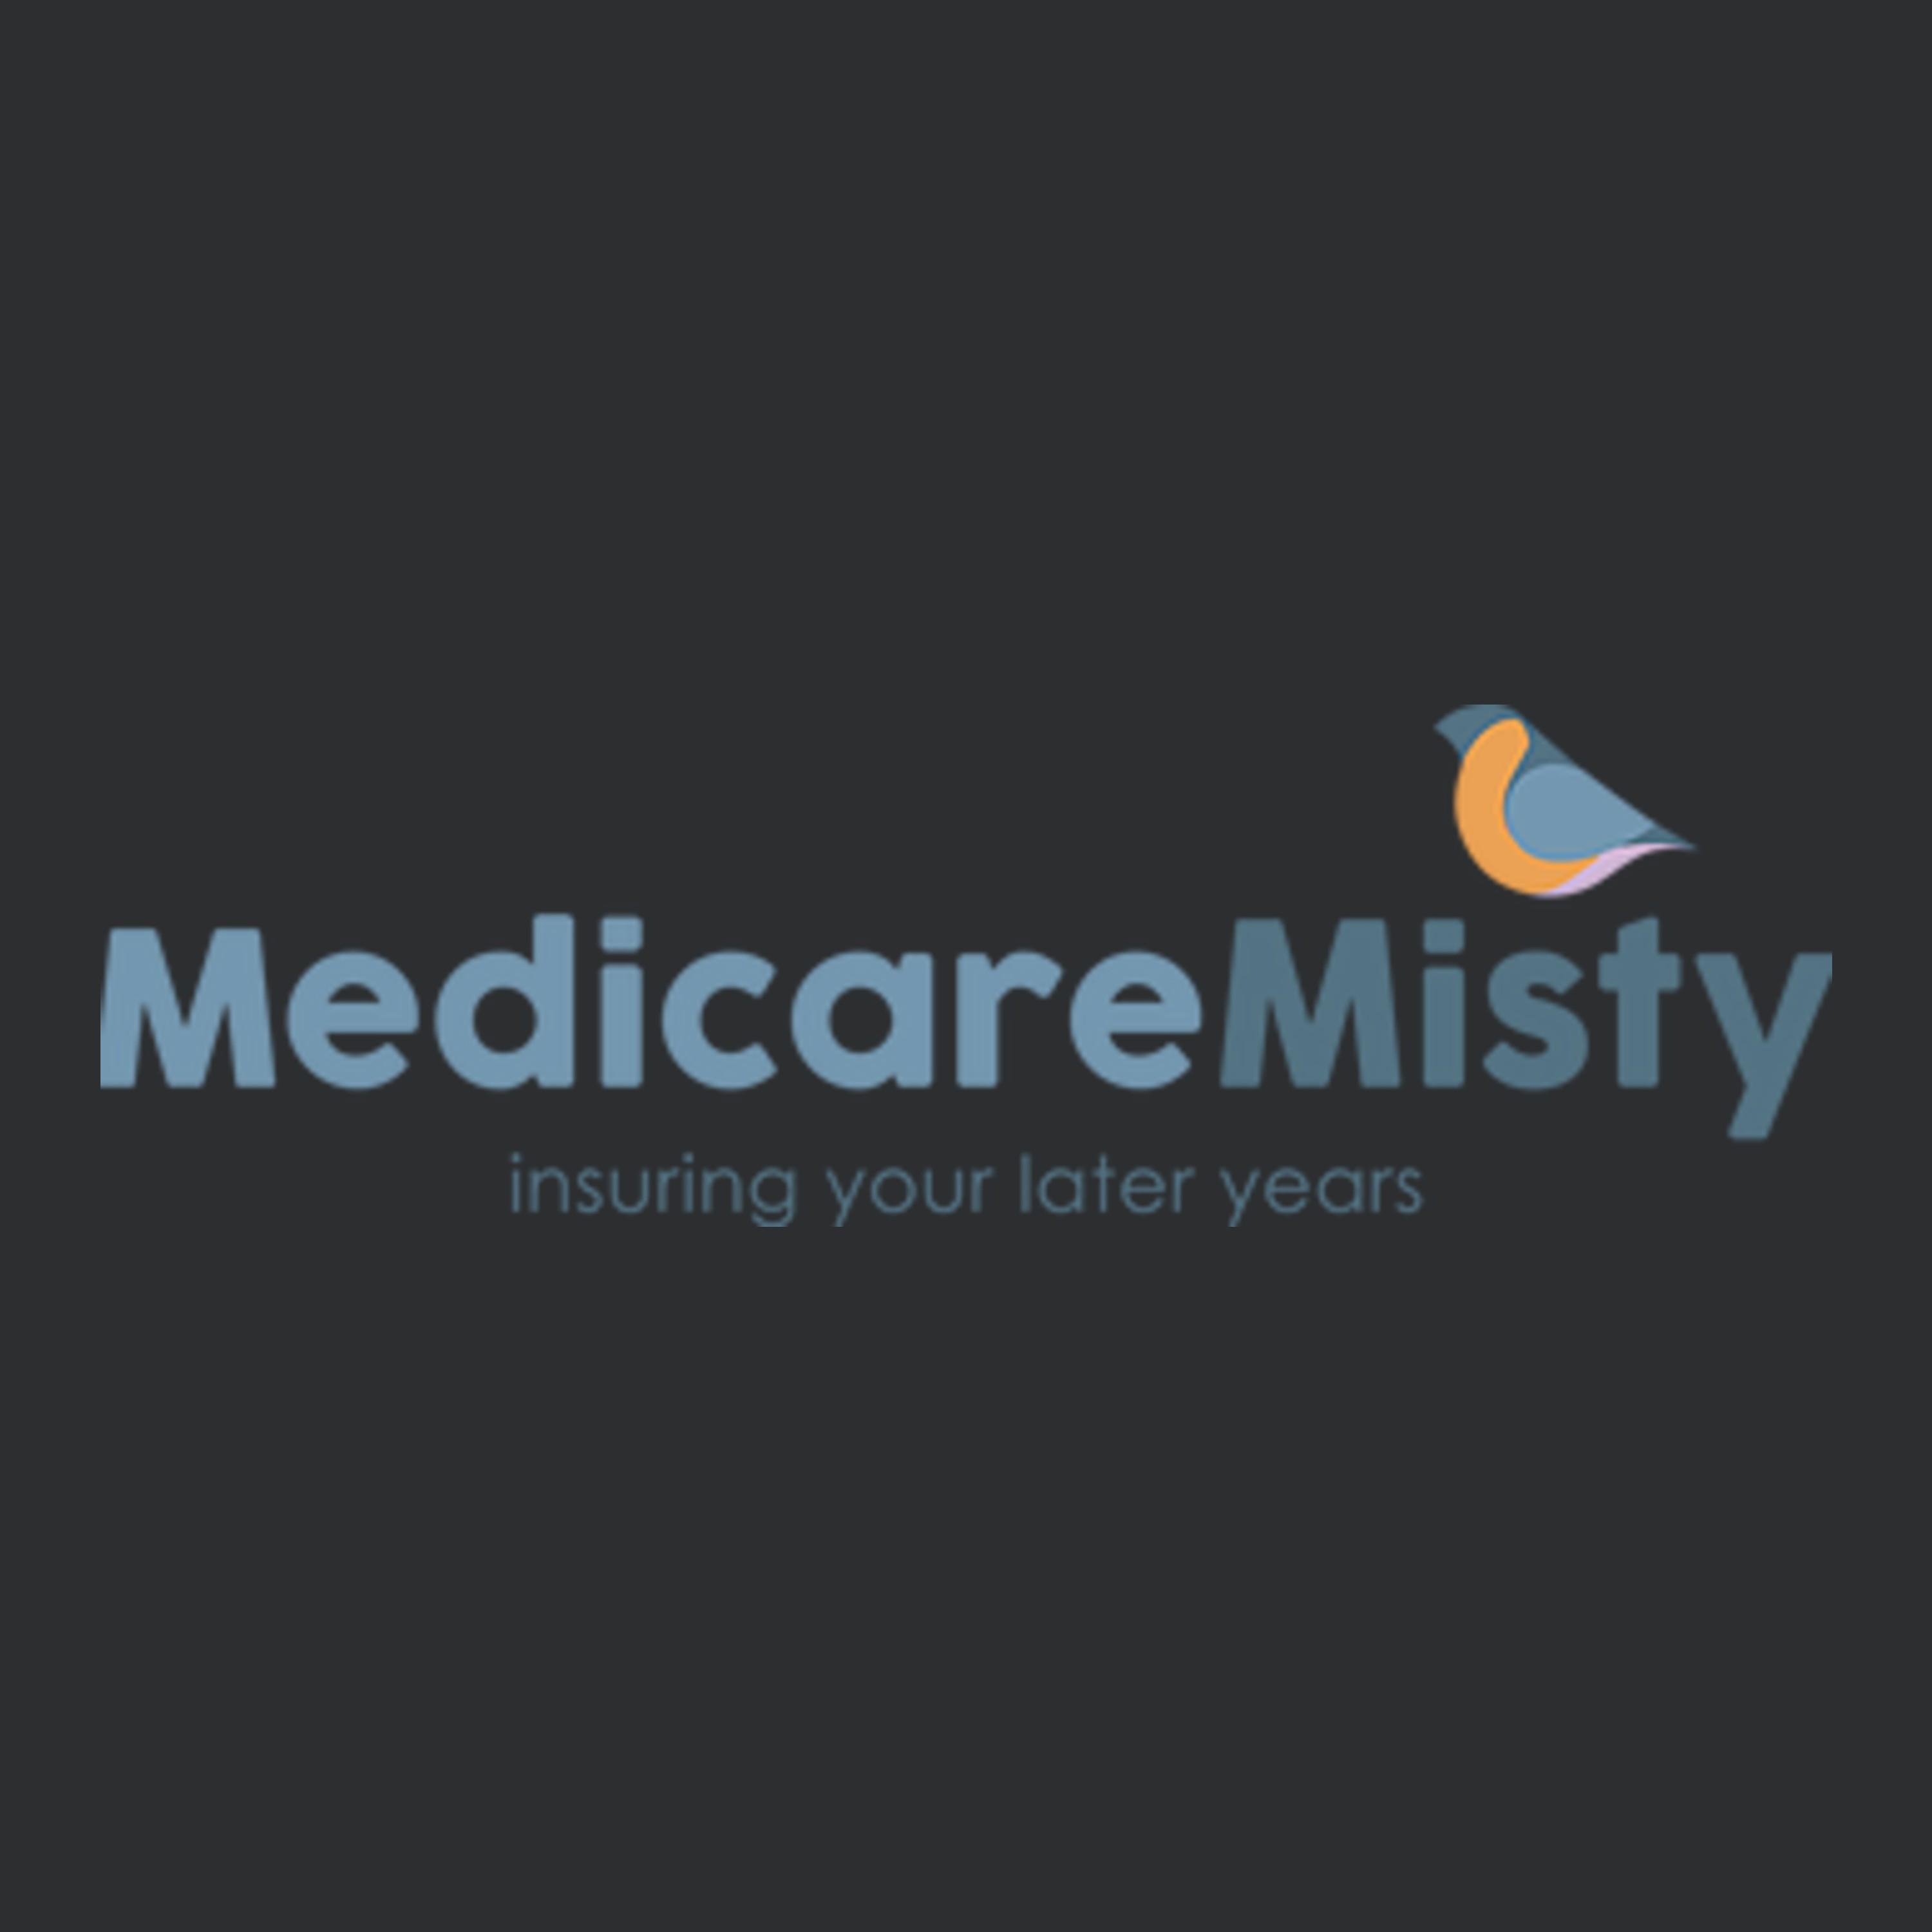 Medicare Misty